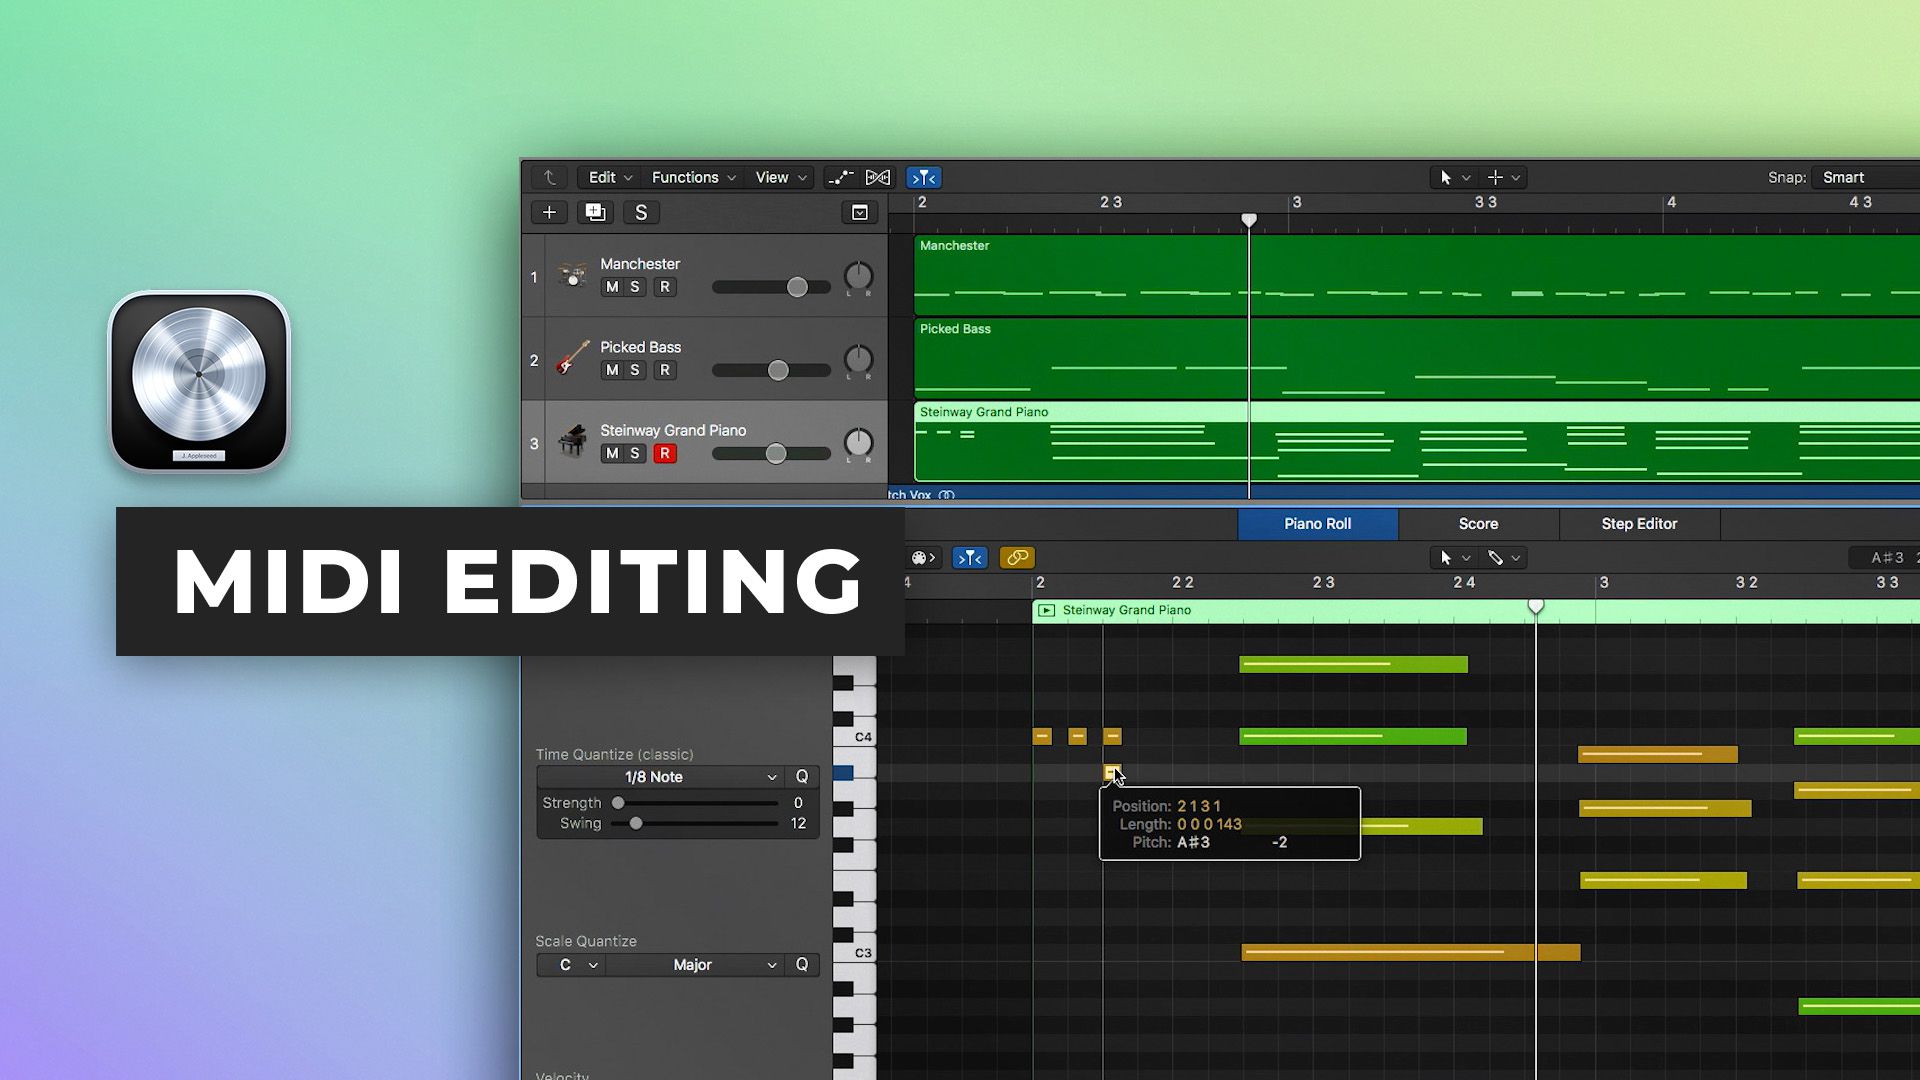 MIDI editing in Logic Pro X